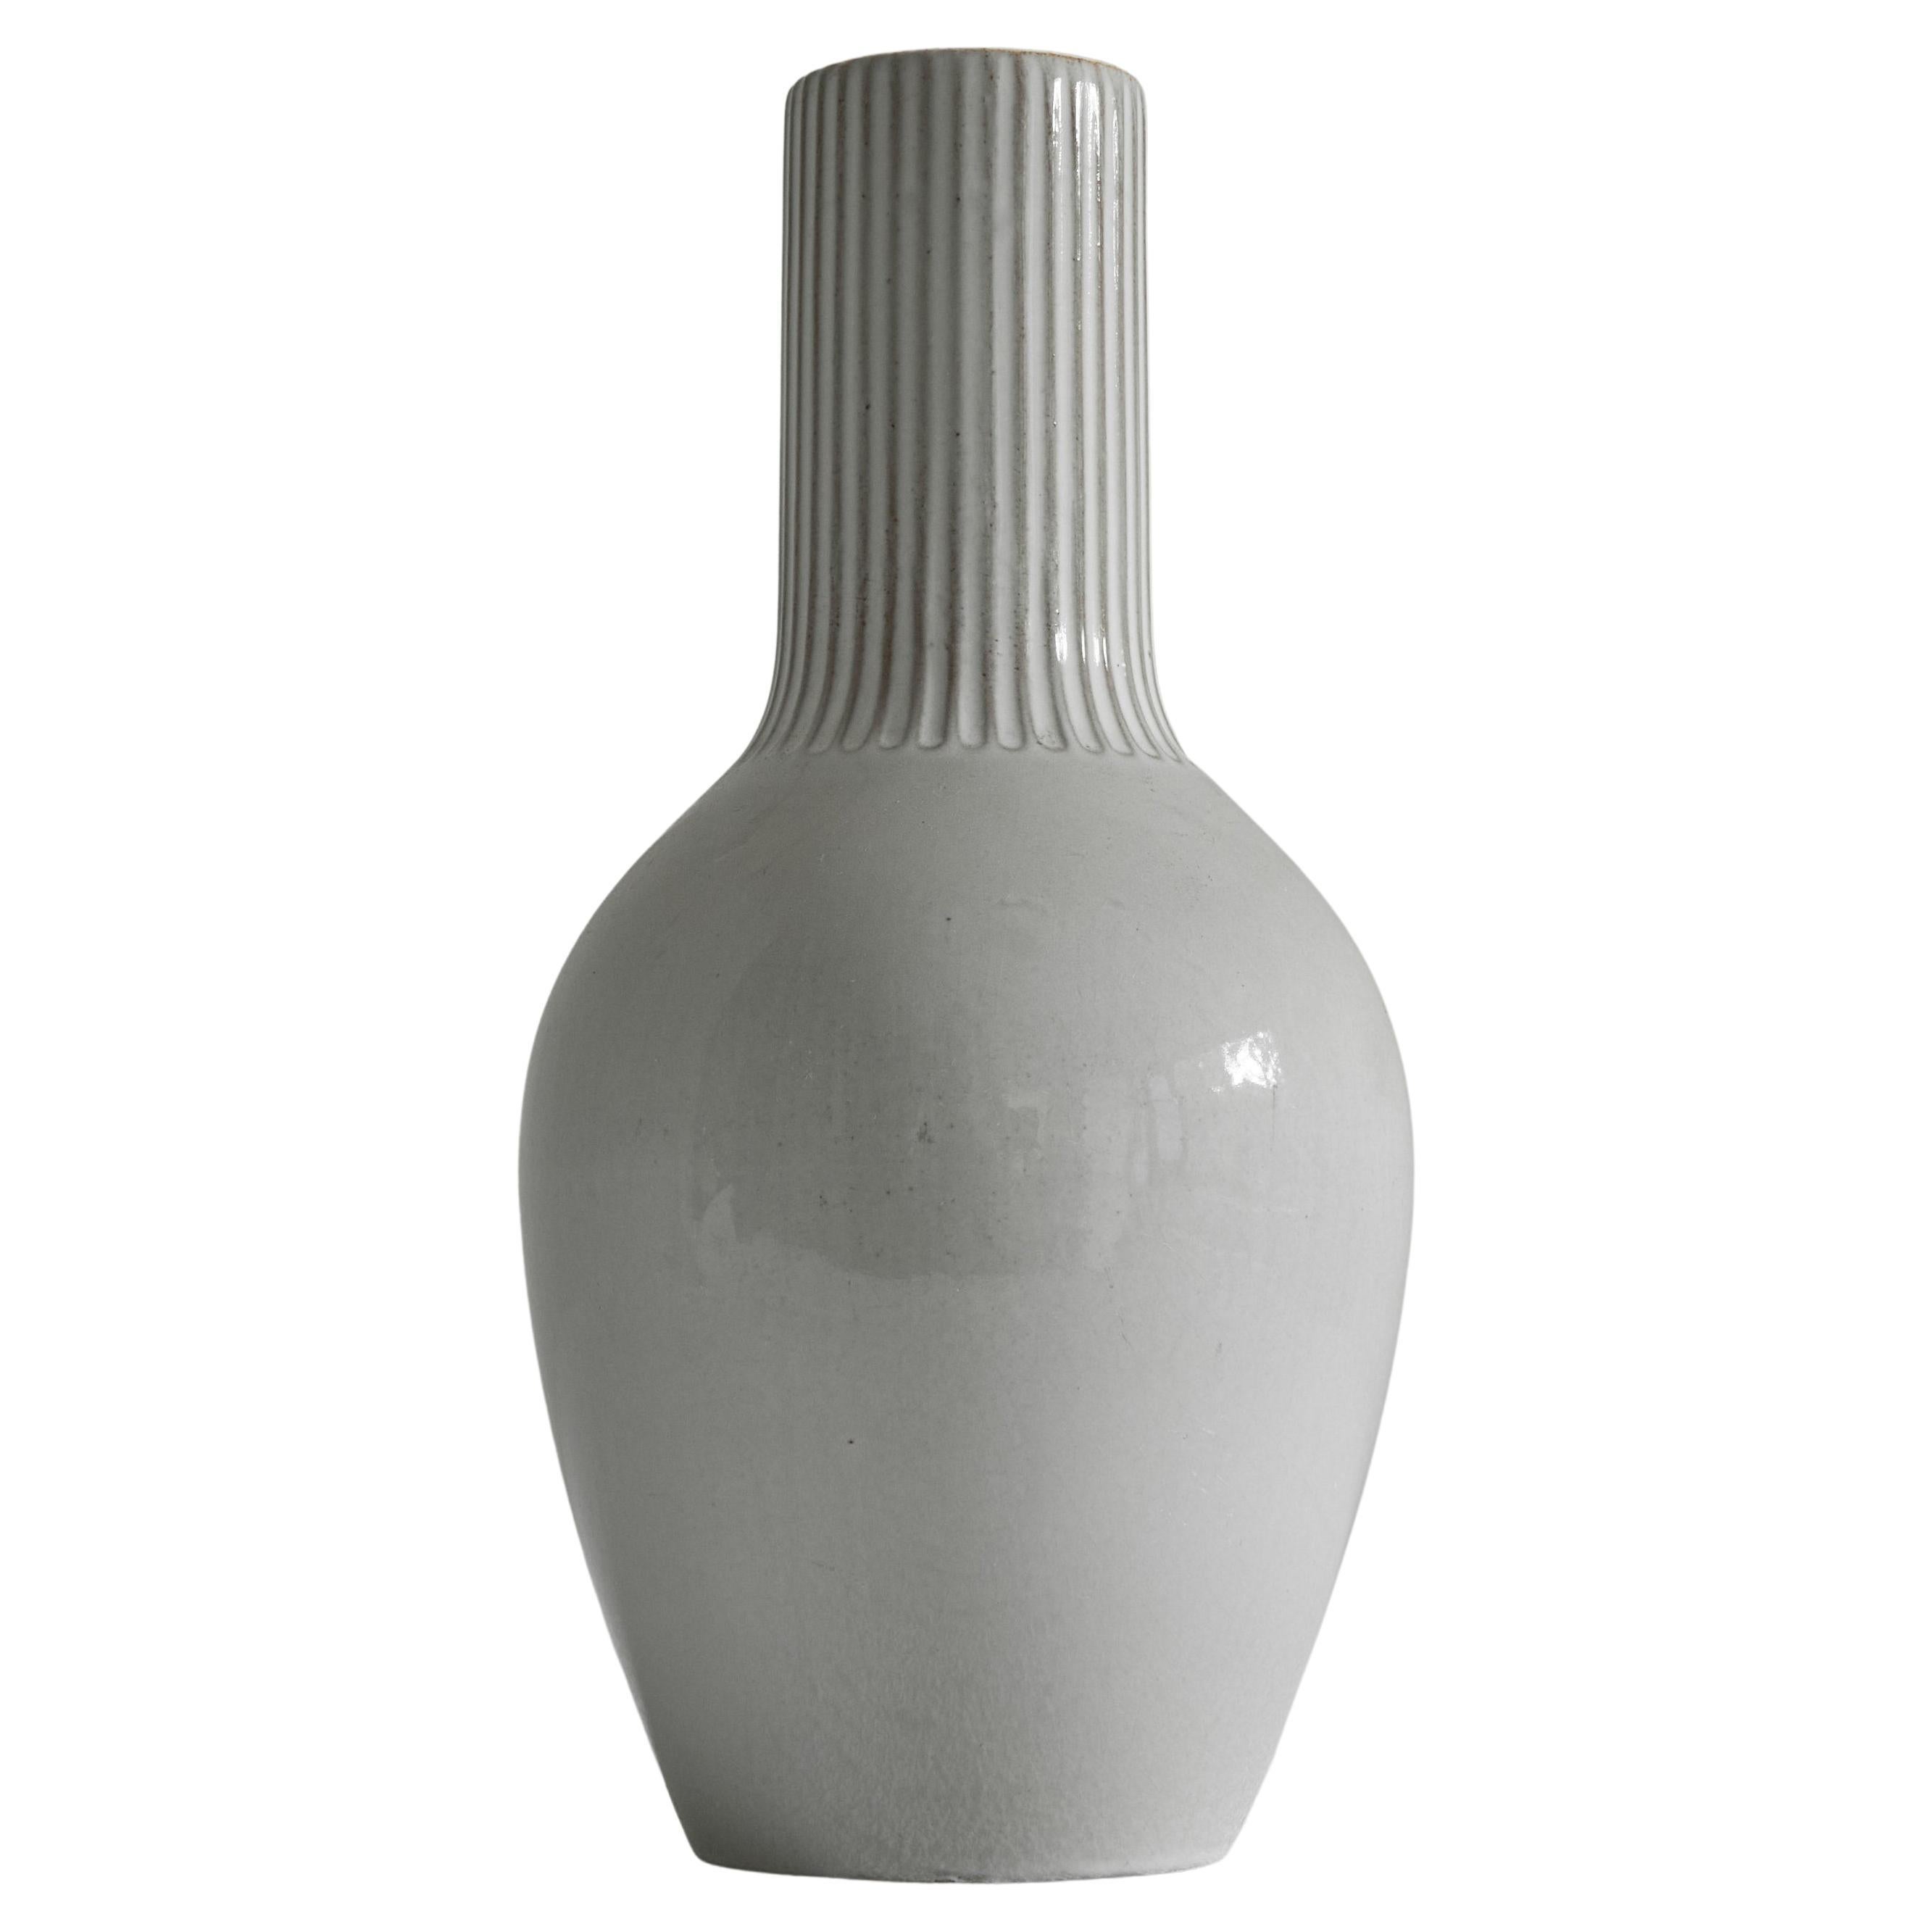 Willem Visser Sphinx Maastricht 'V6' Studio Pottery Vase, 1950s